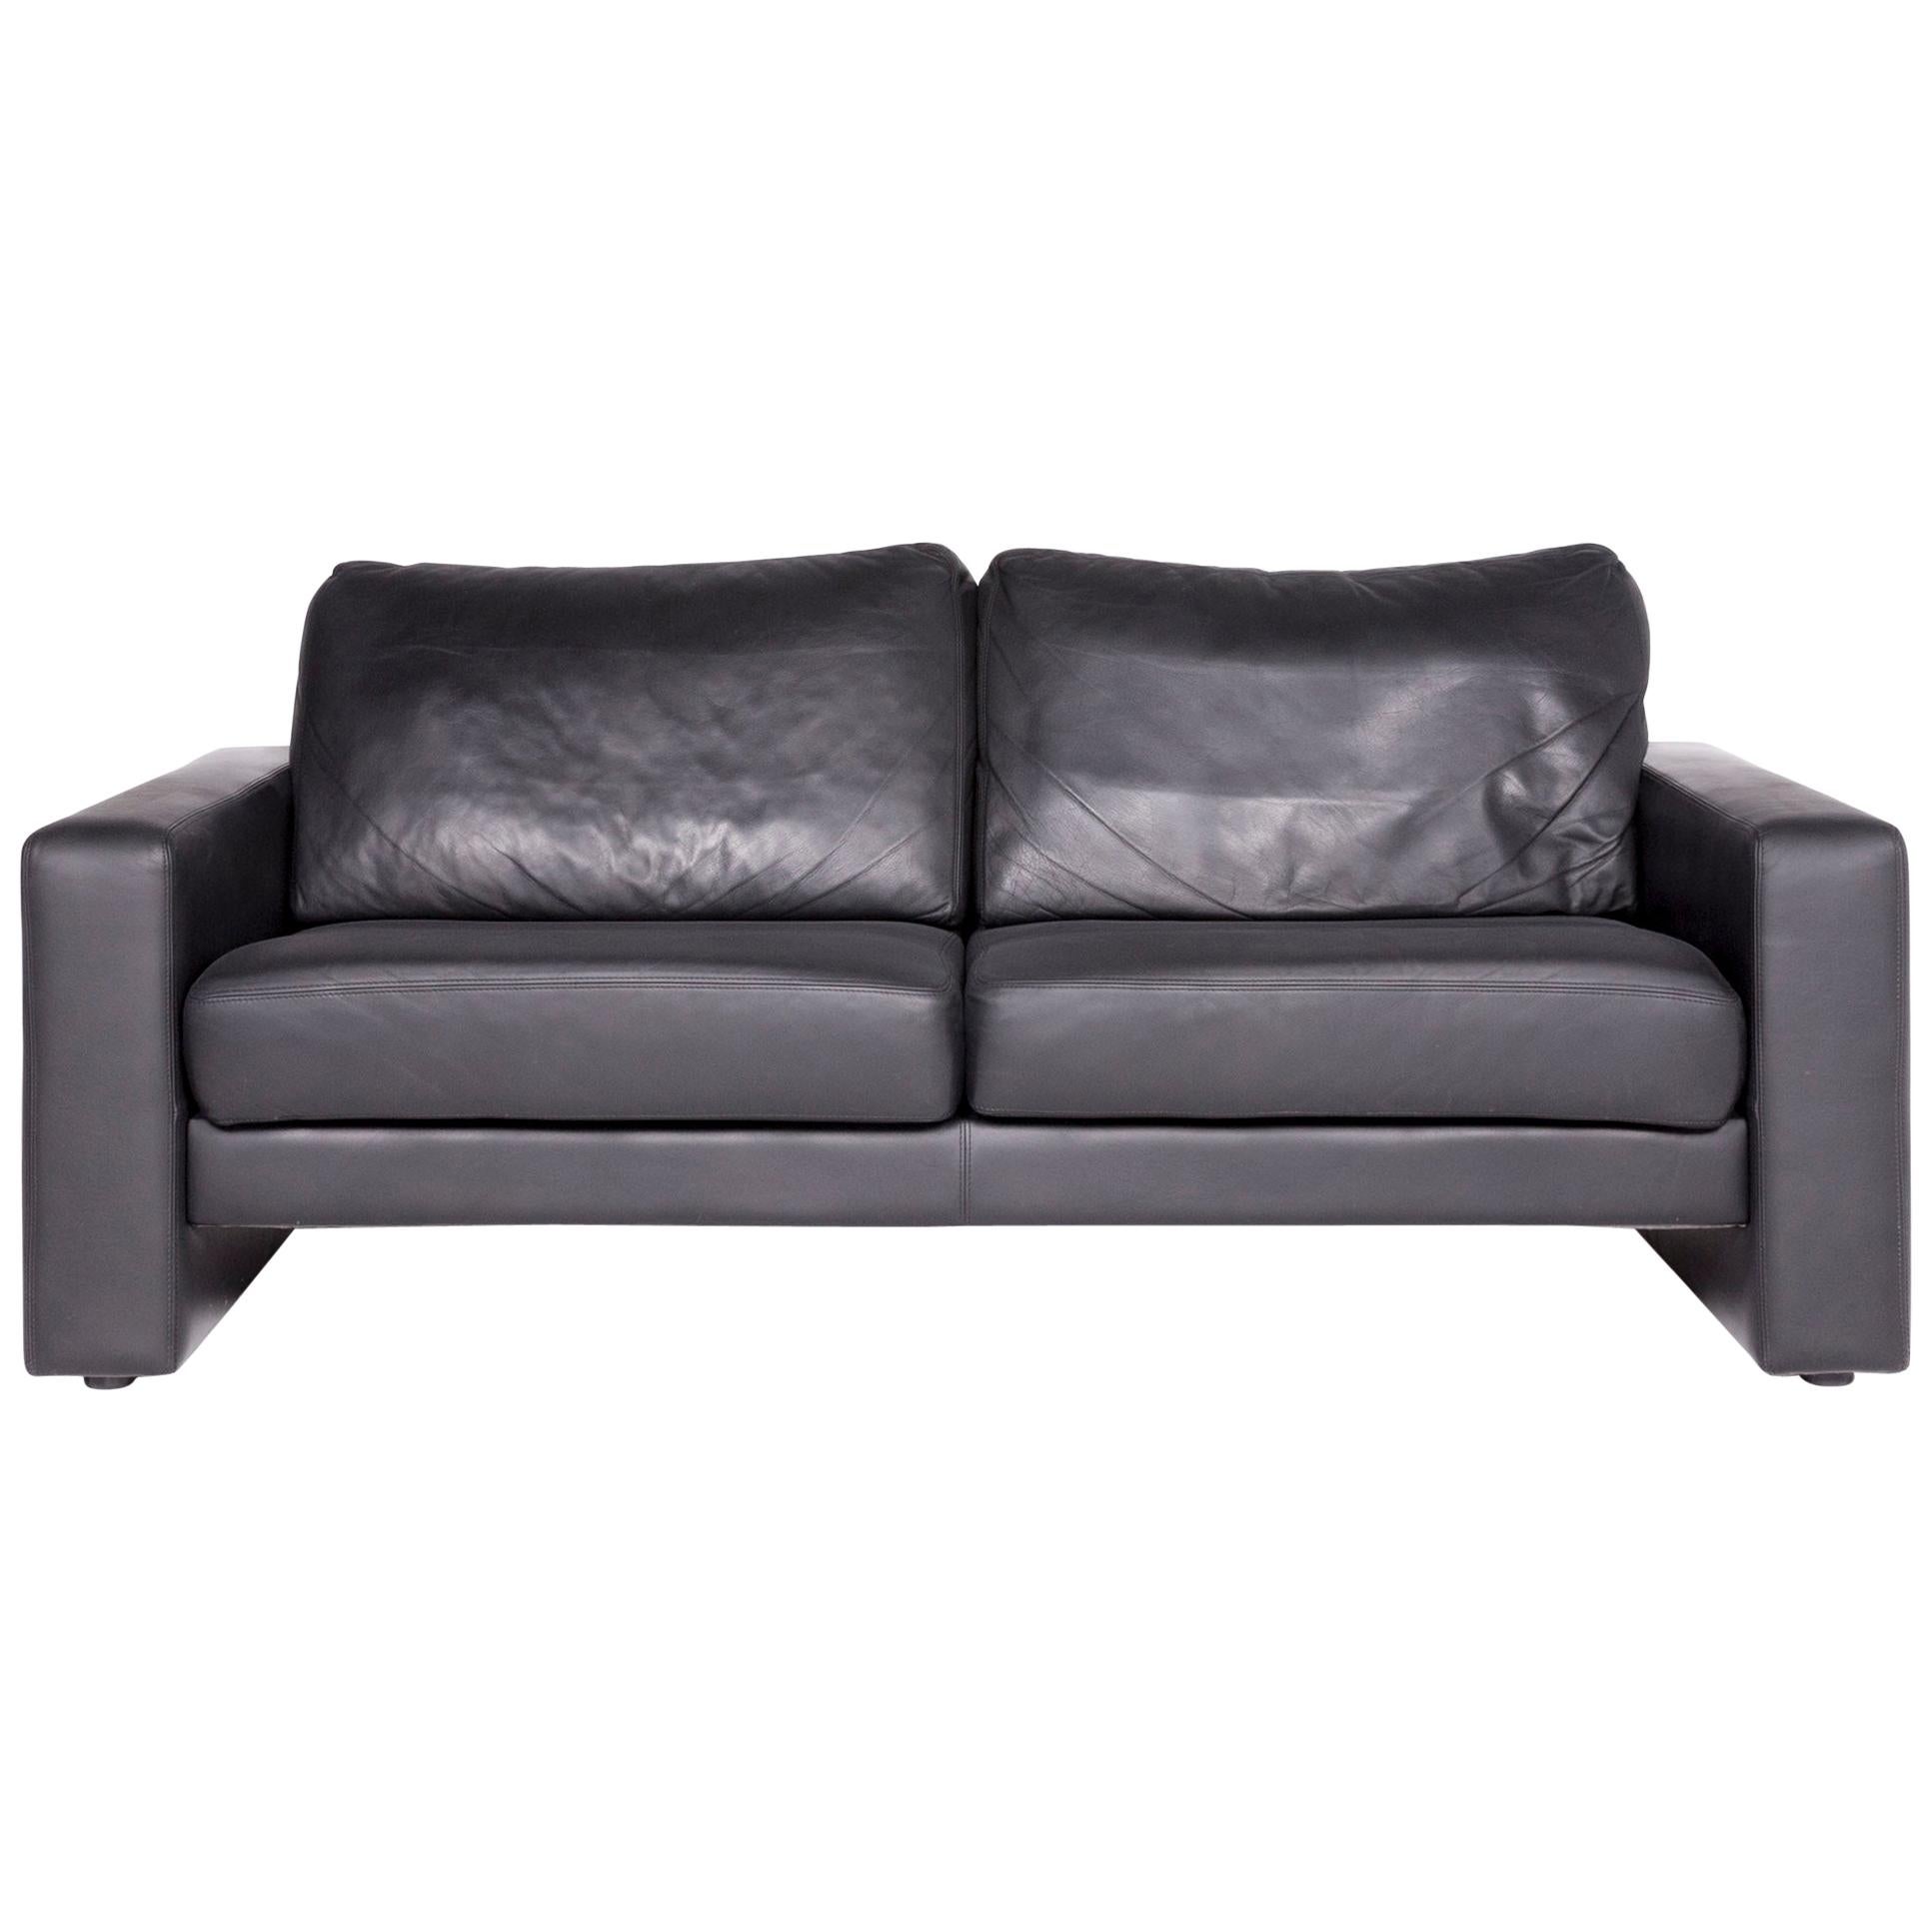 Schröno Designer Leather Sofa Black Genuine Leather Two-Seat Couch